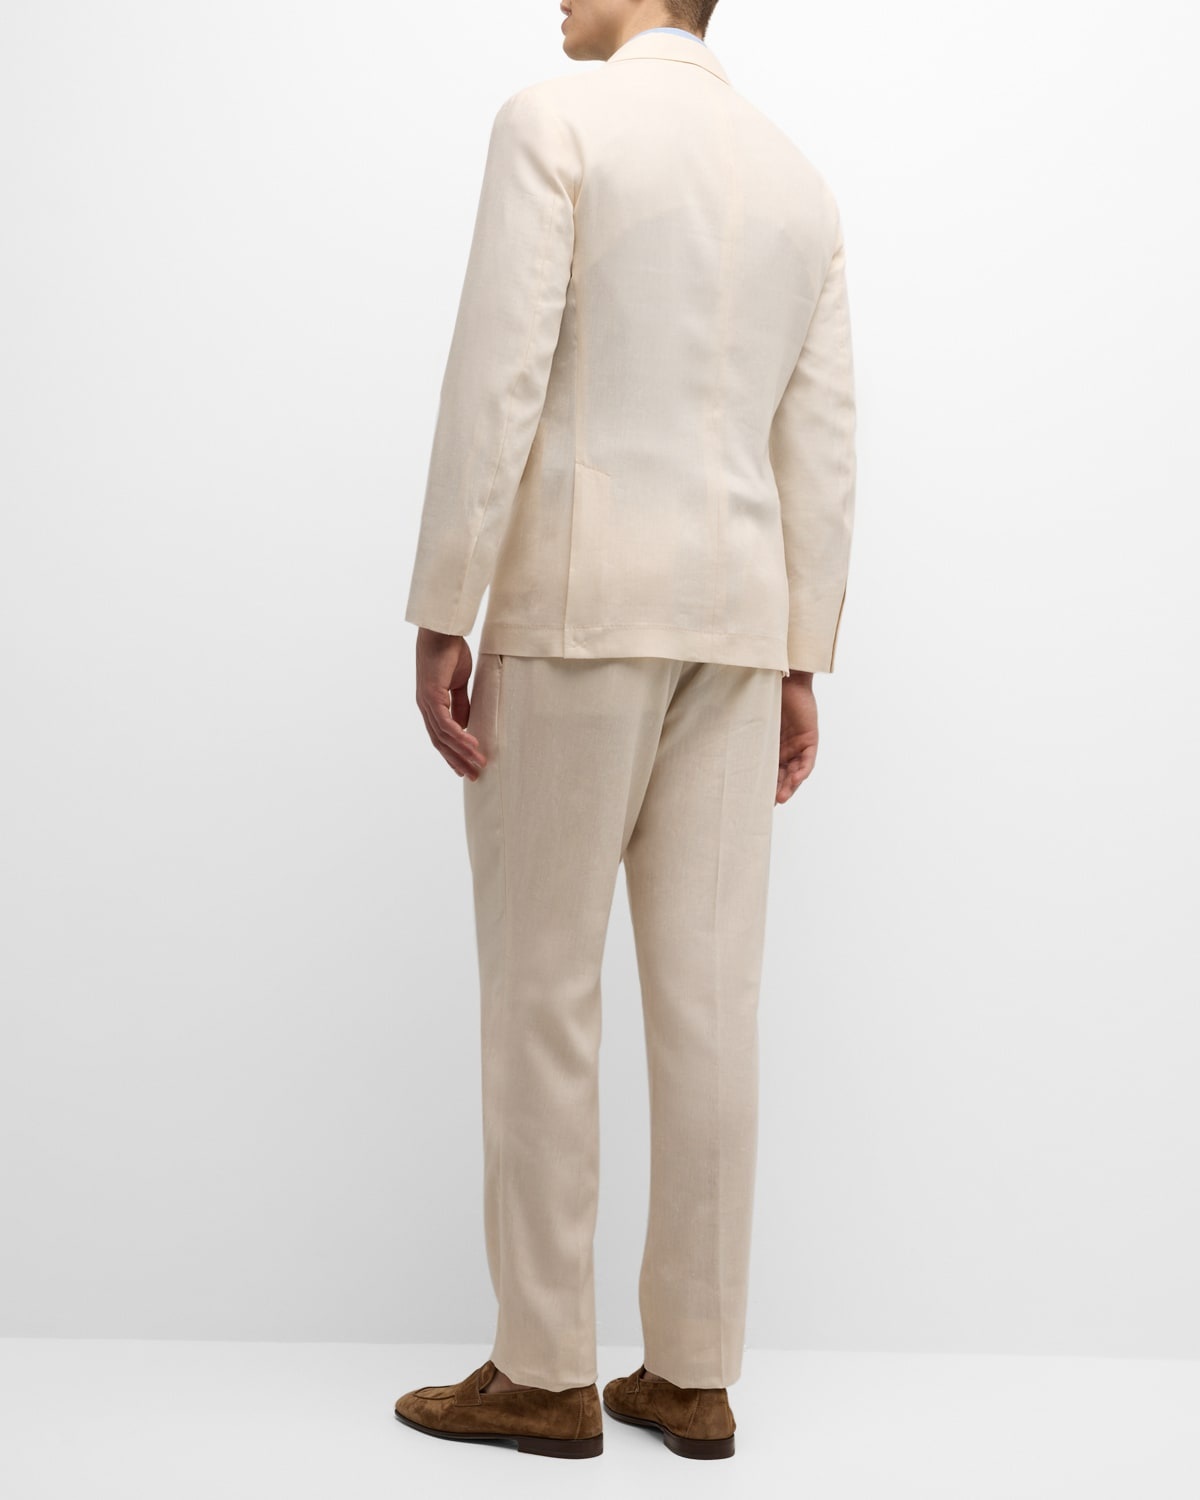 Men's Linen and Wool Solid Suit - 3